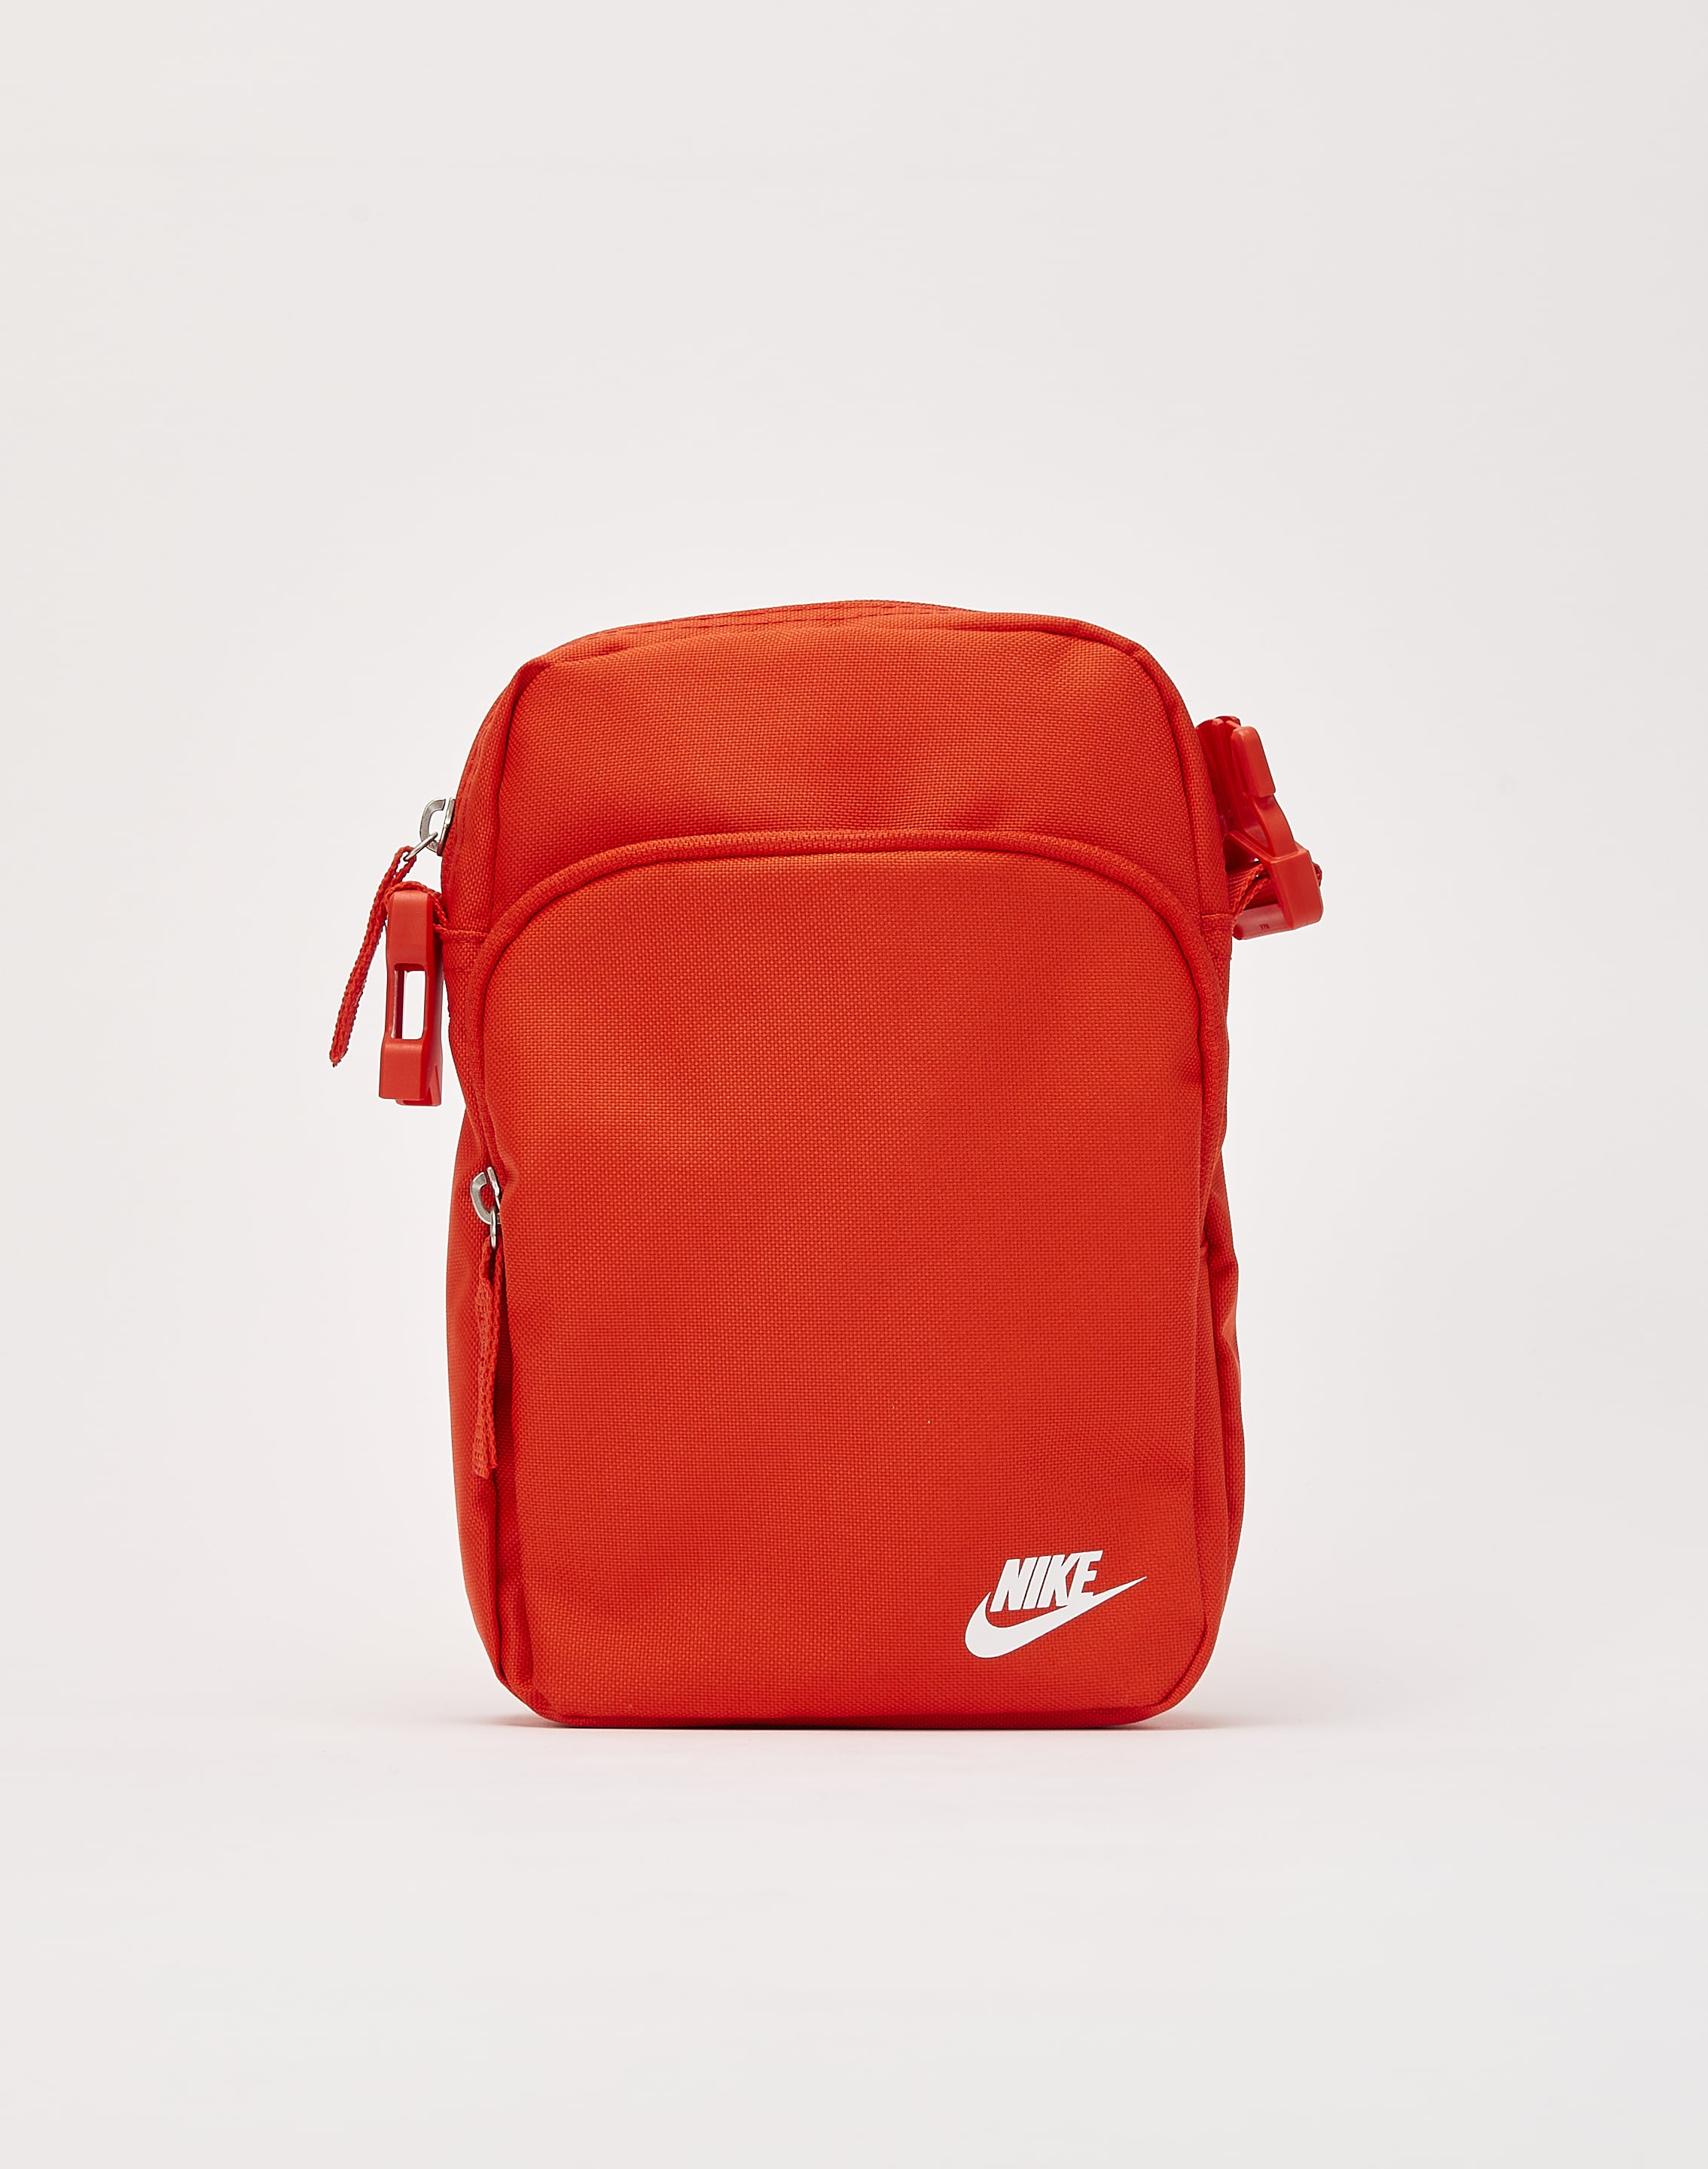 Lacoste Zip Crossover Messenger Bag in Red for Men